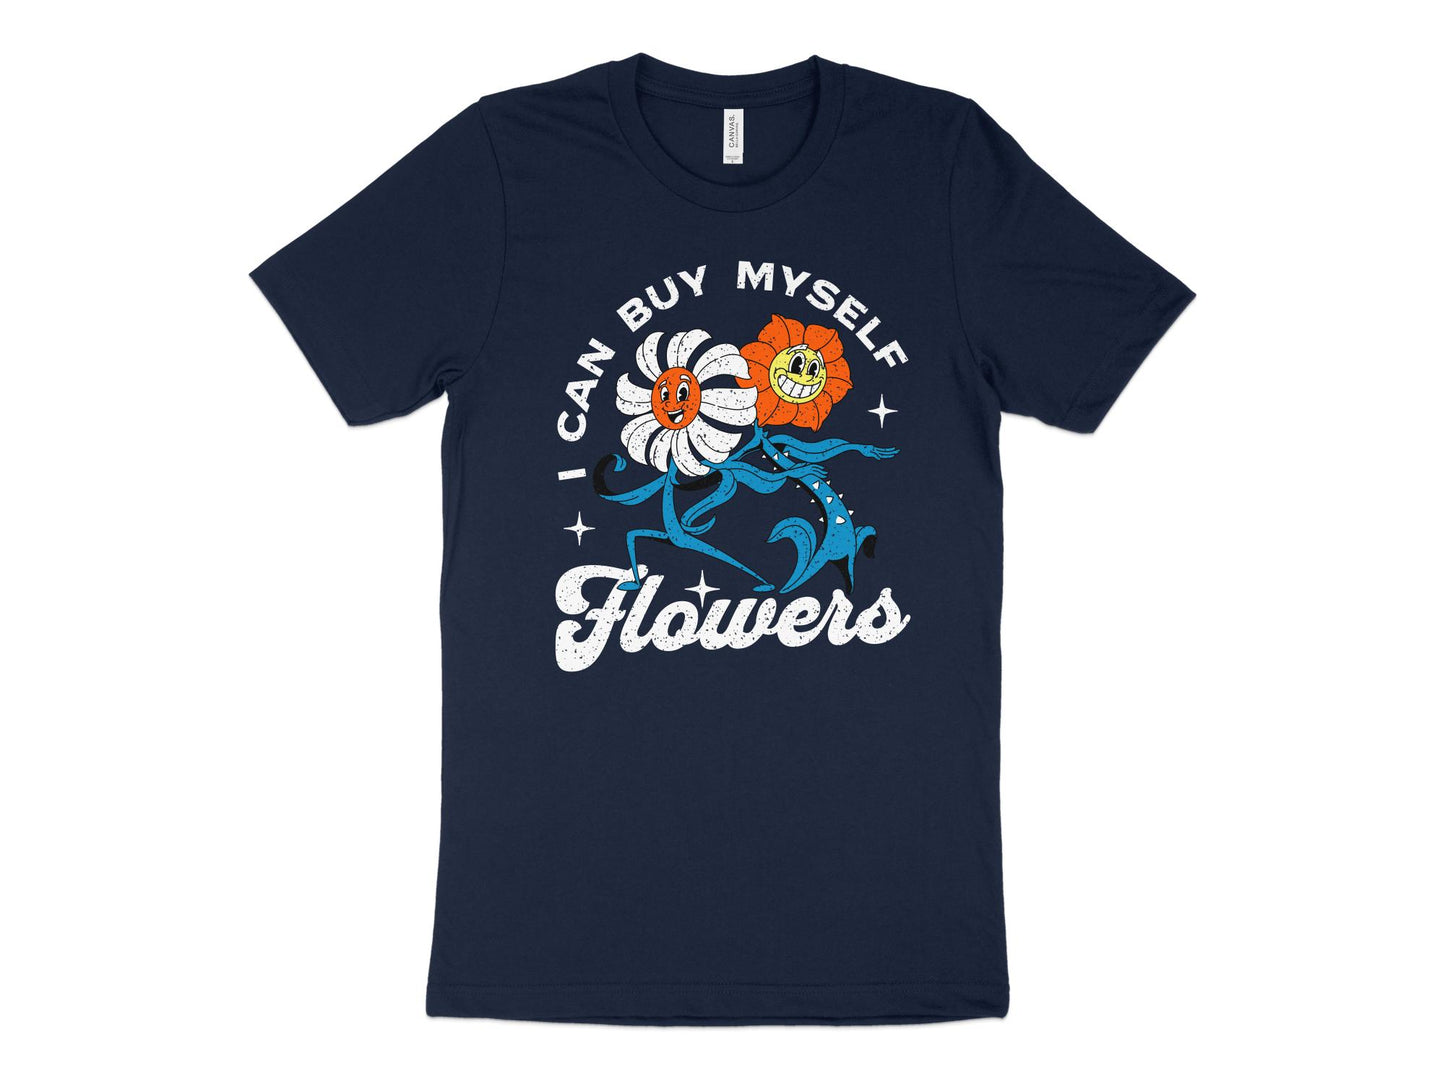 I Can Buy Myself Flowers Shirt navy blue